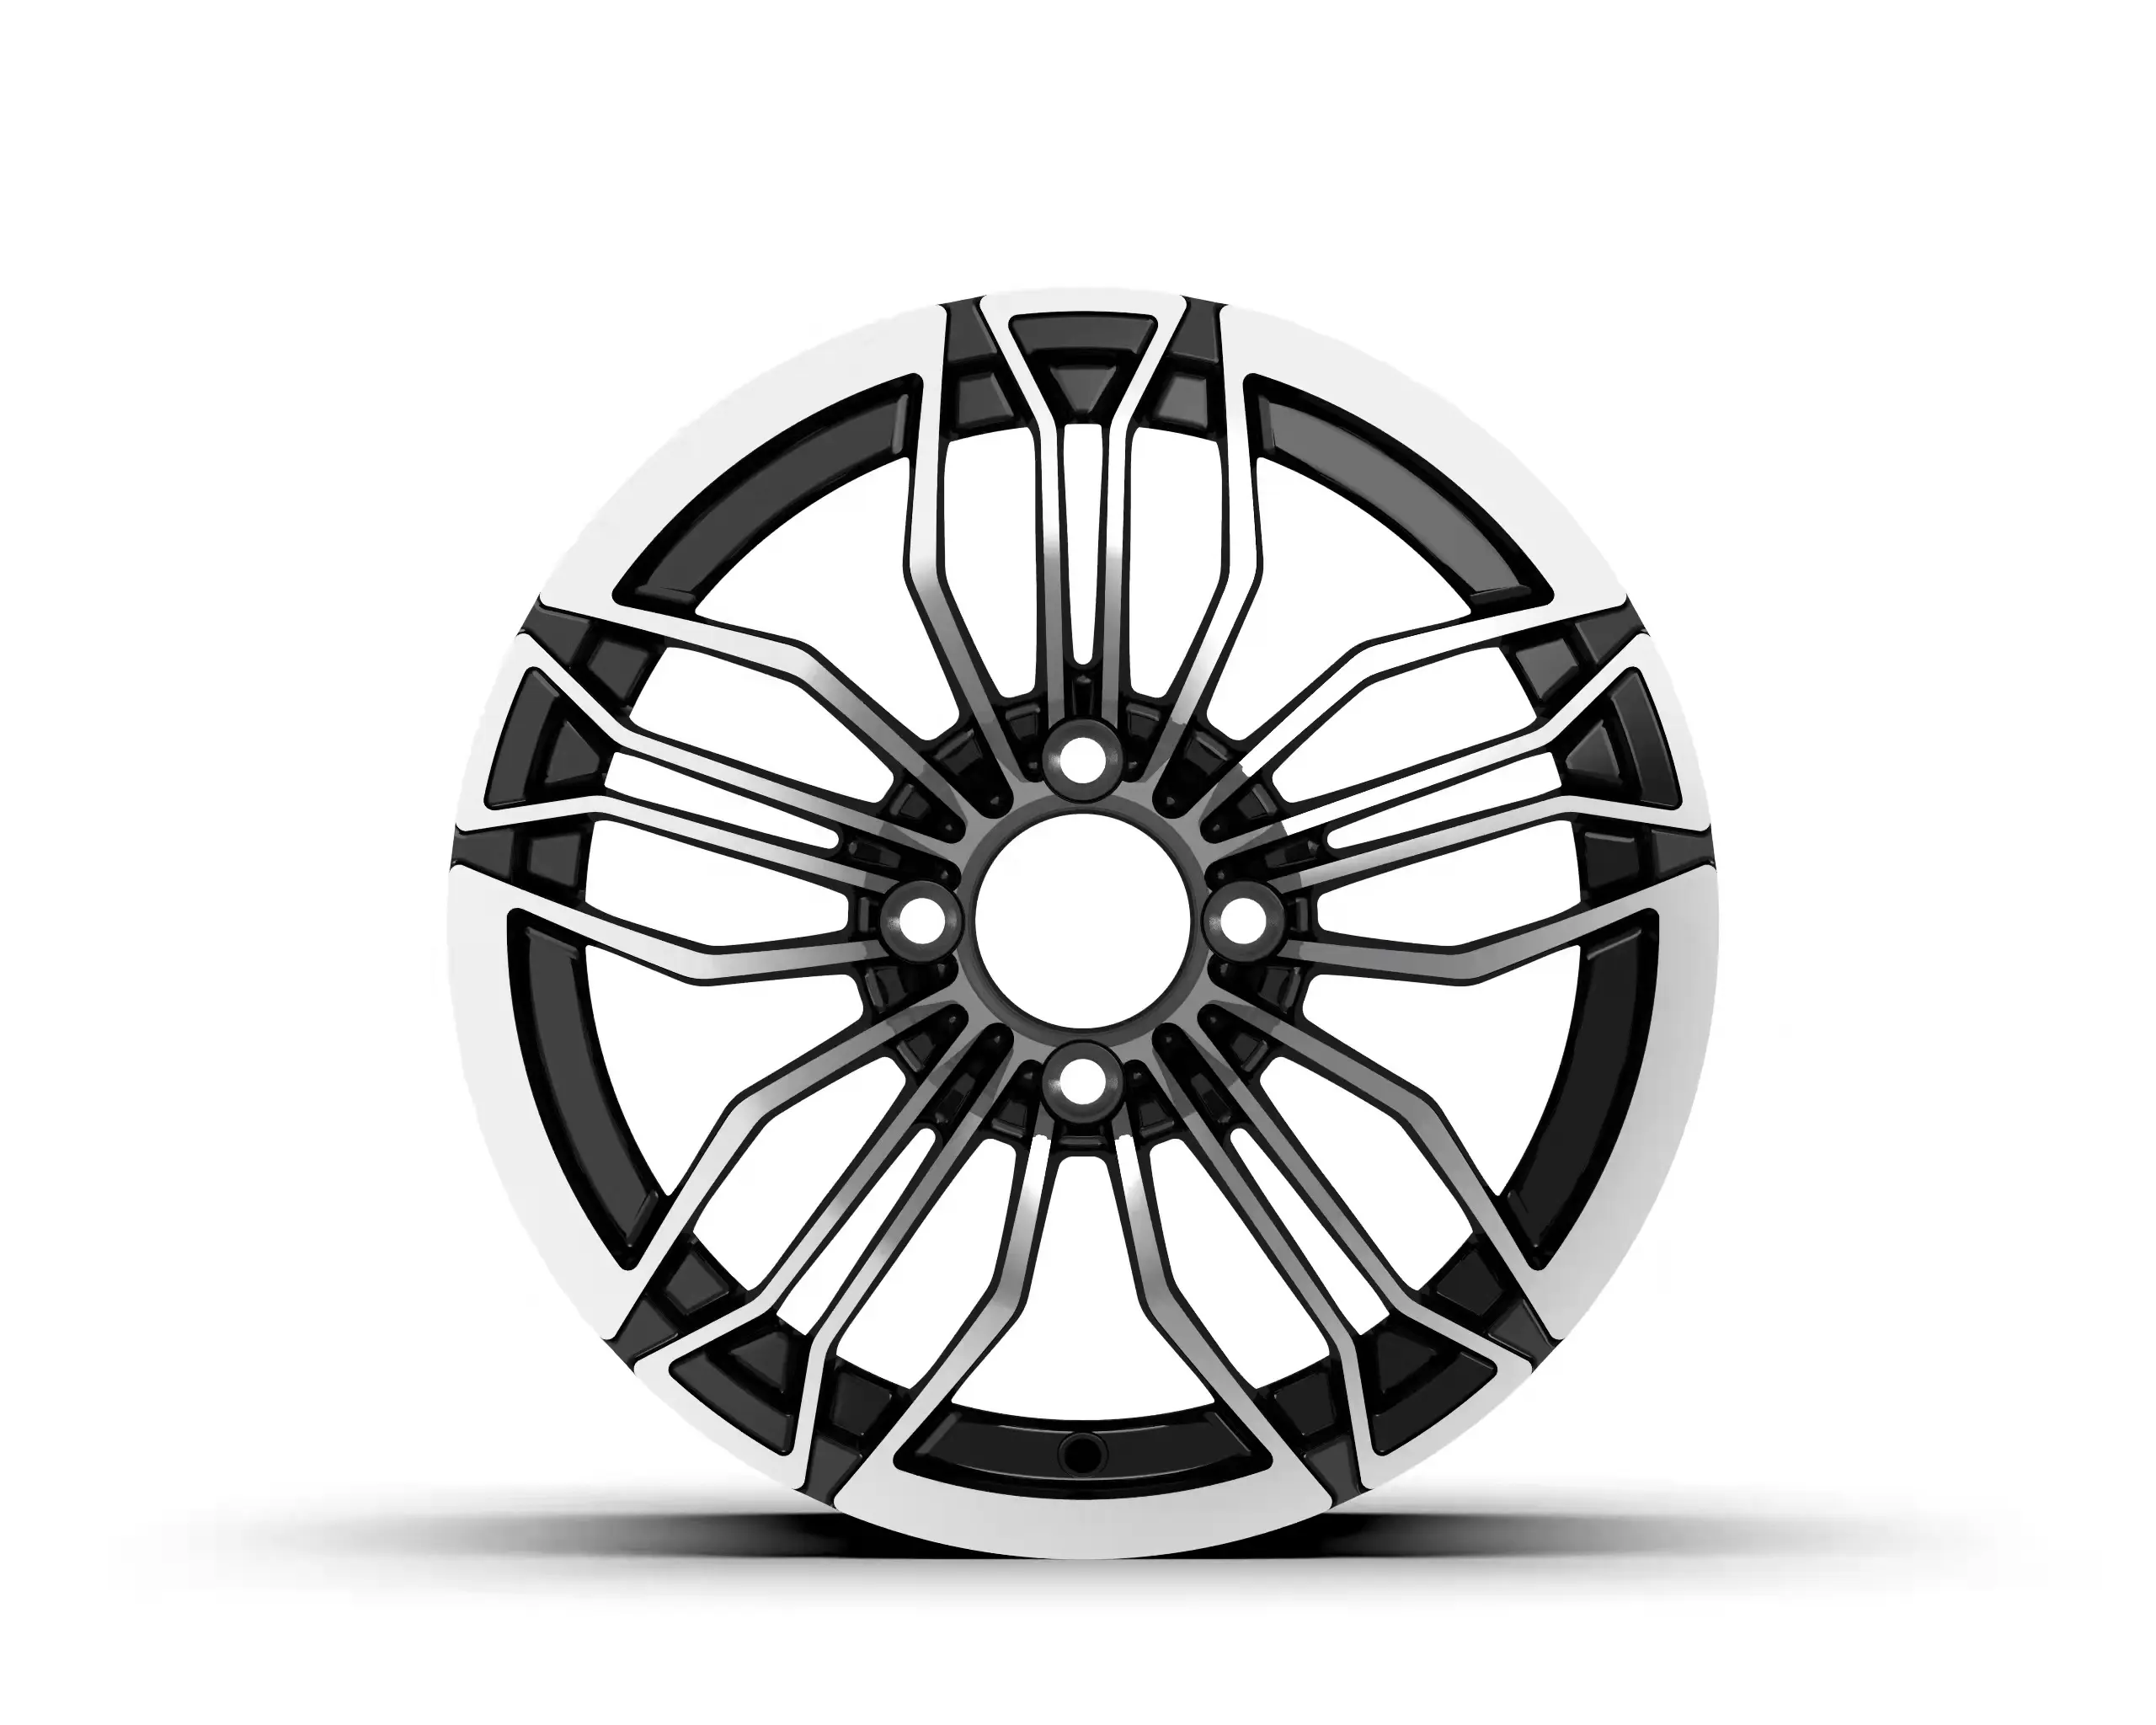 Carrello da Golf all'ingrosso diretto in fabbrica Rota Wheel Sport Rim parti di pneumatici ruota in lega di alluminio da 14 pollici